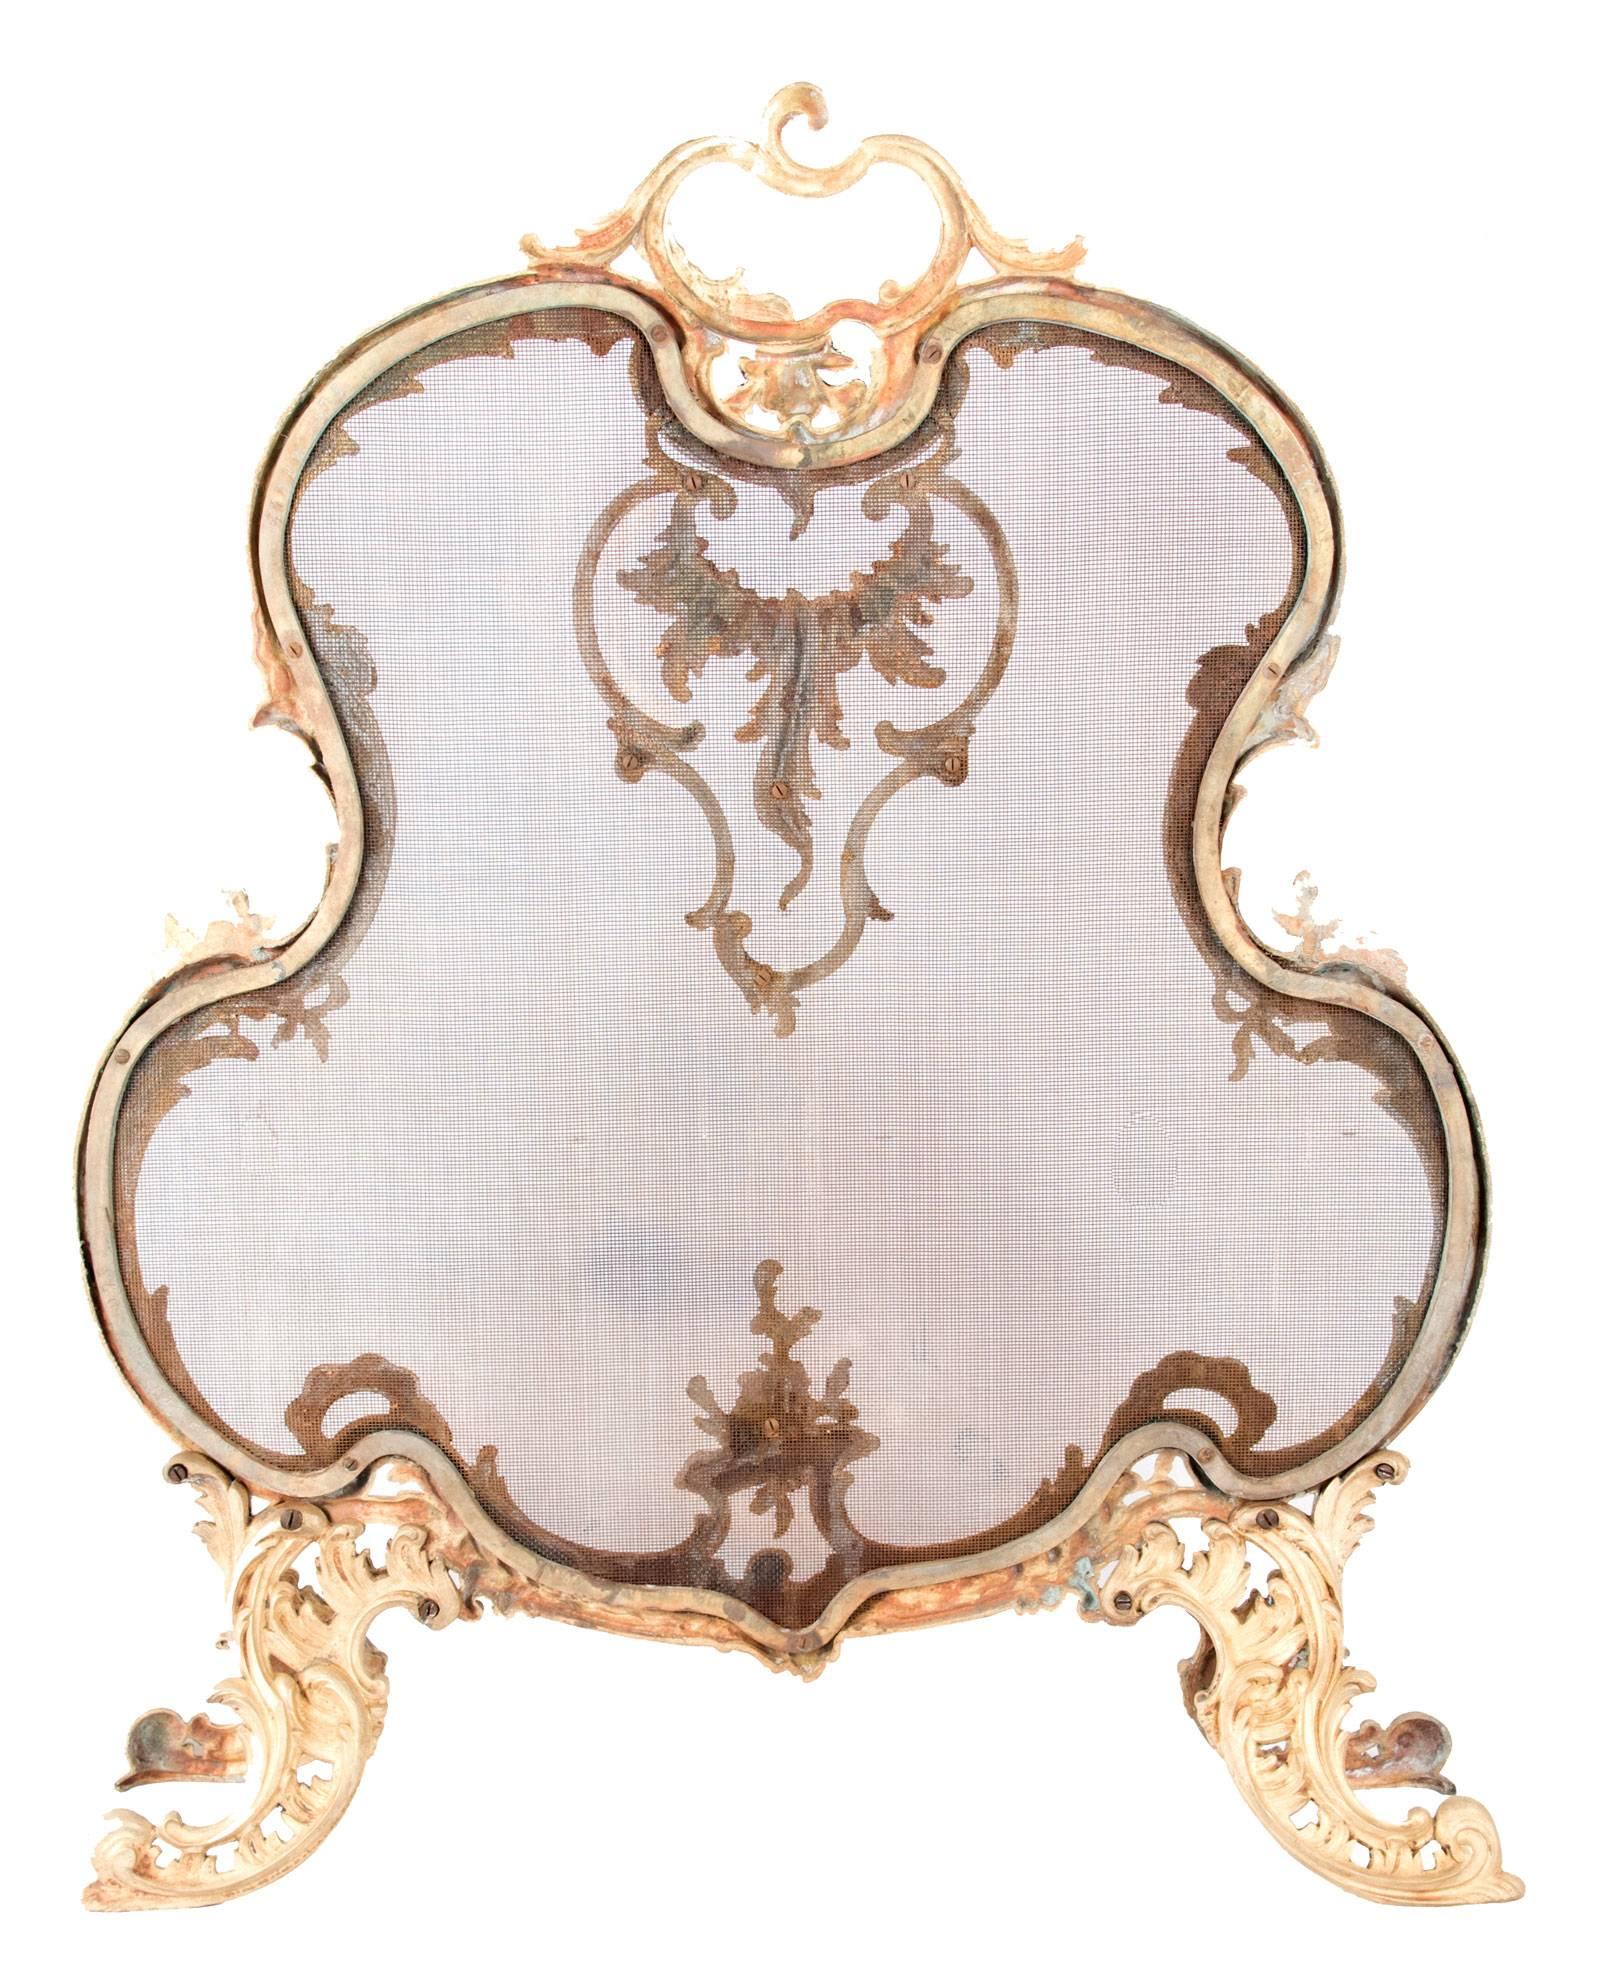 Rococo Revival Gilt Brass Rococo-Style Fireplace Screen